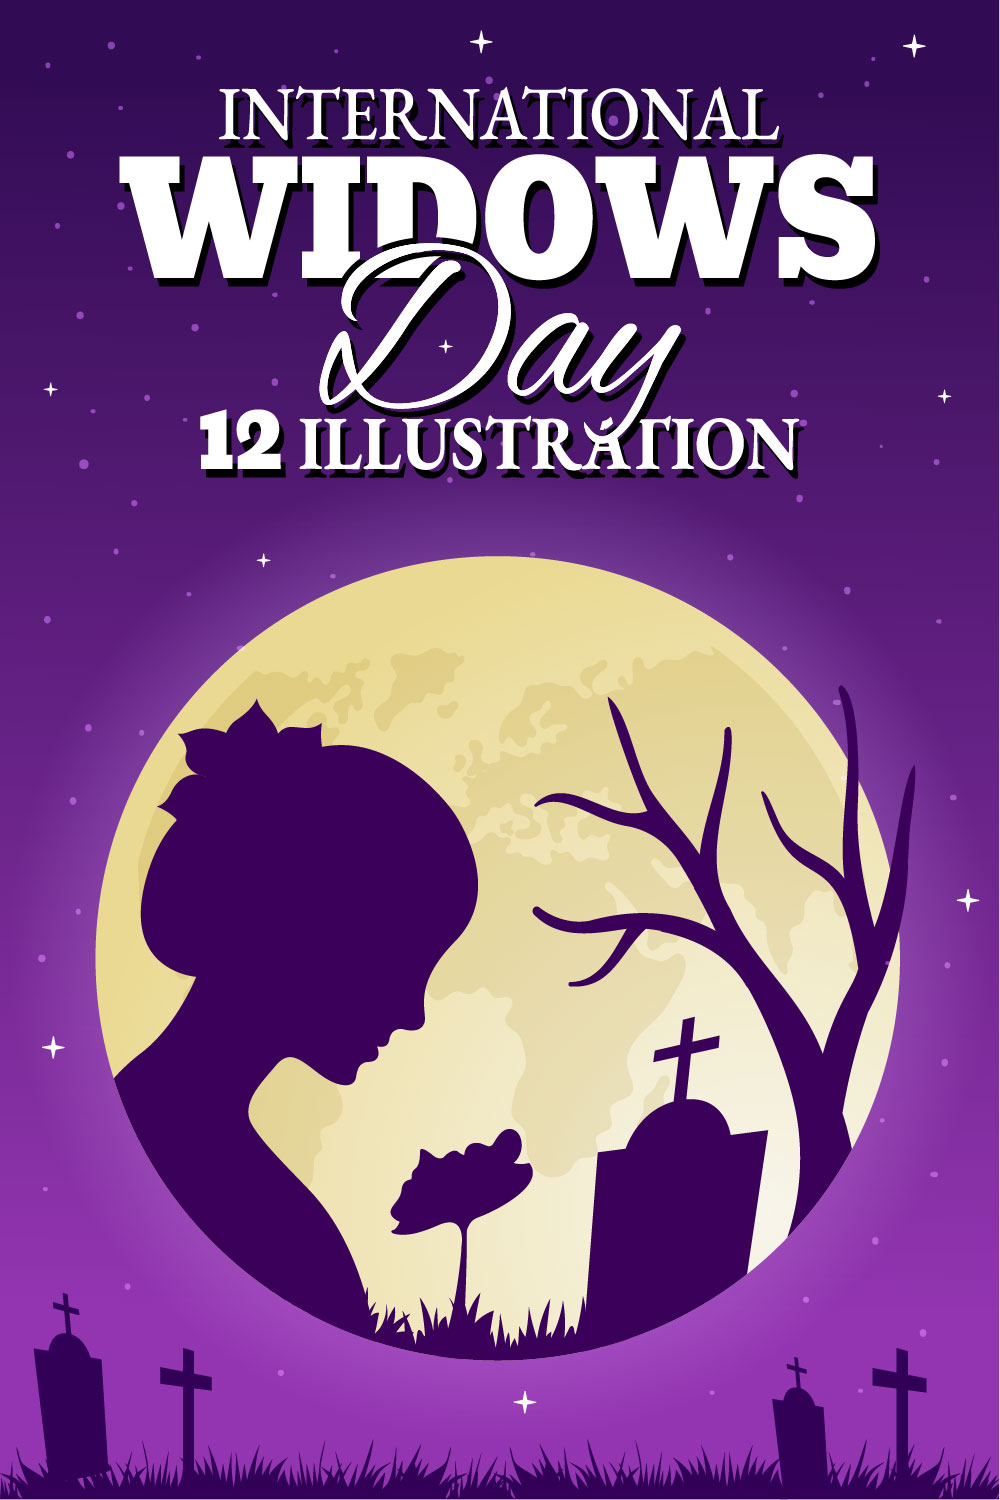 12 International Widows Day Illustration pinterest preview image.